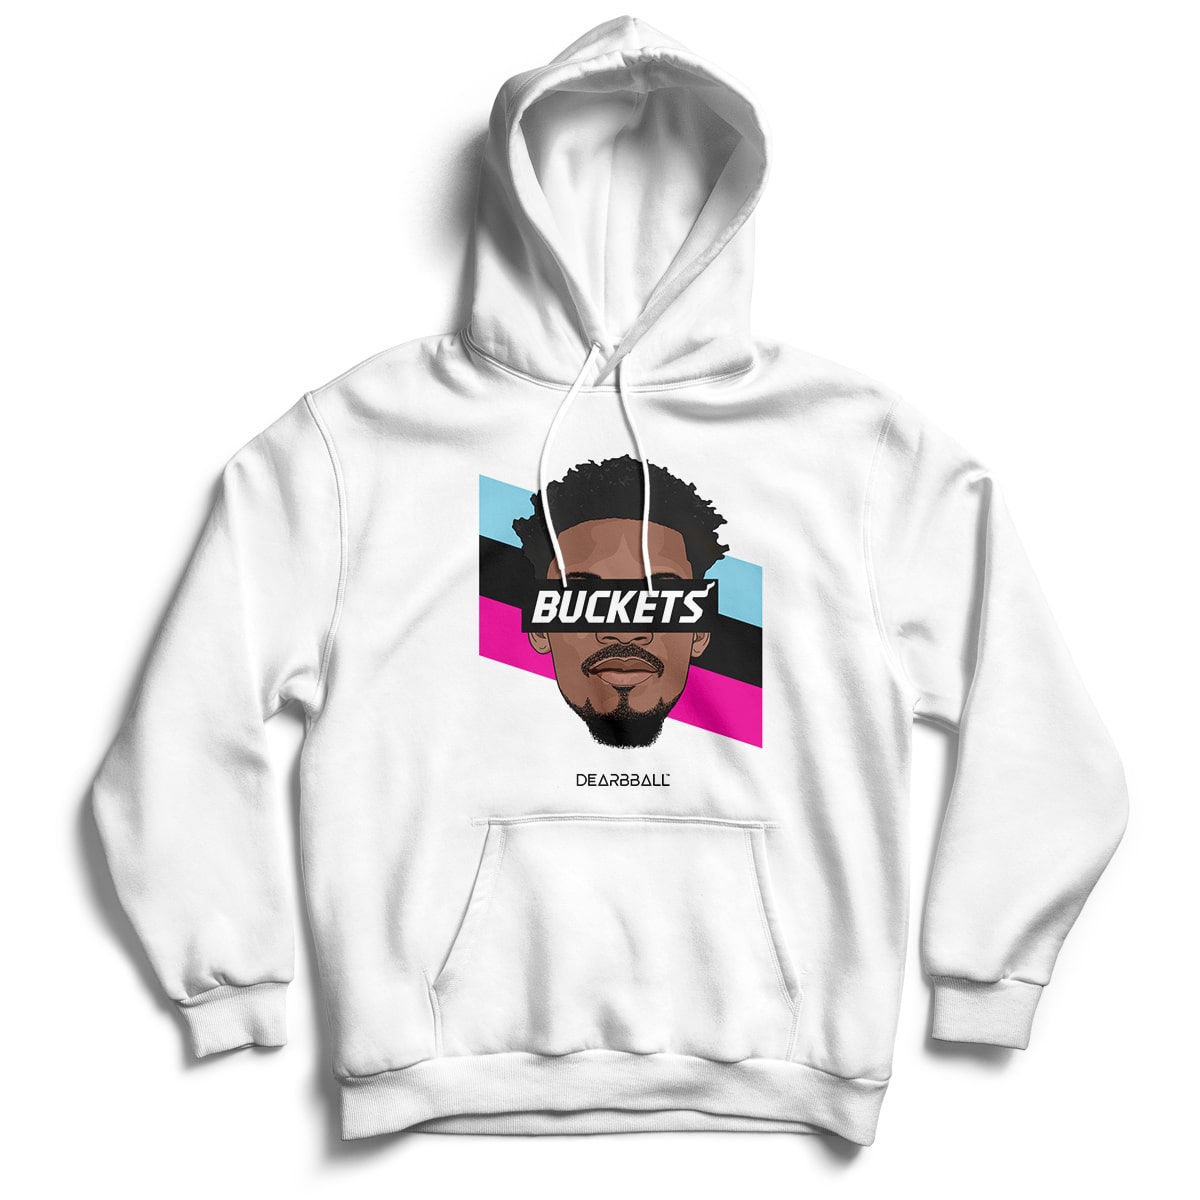 [CHILDREN] DearBBall Hooded Sweatshirt - BUCKETS Miami Vice Edition